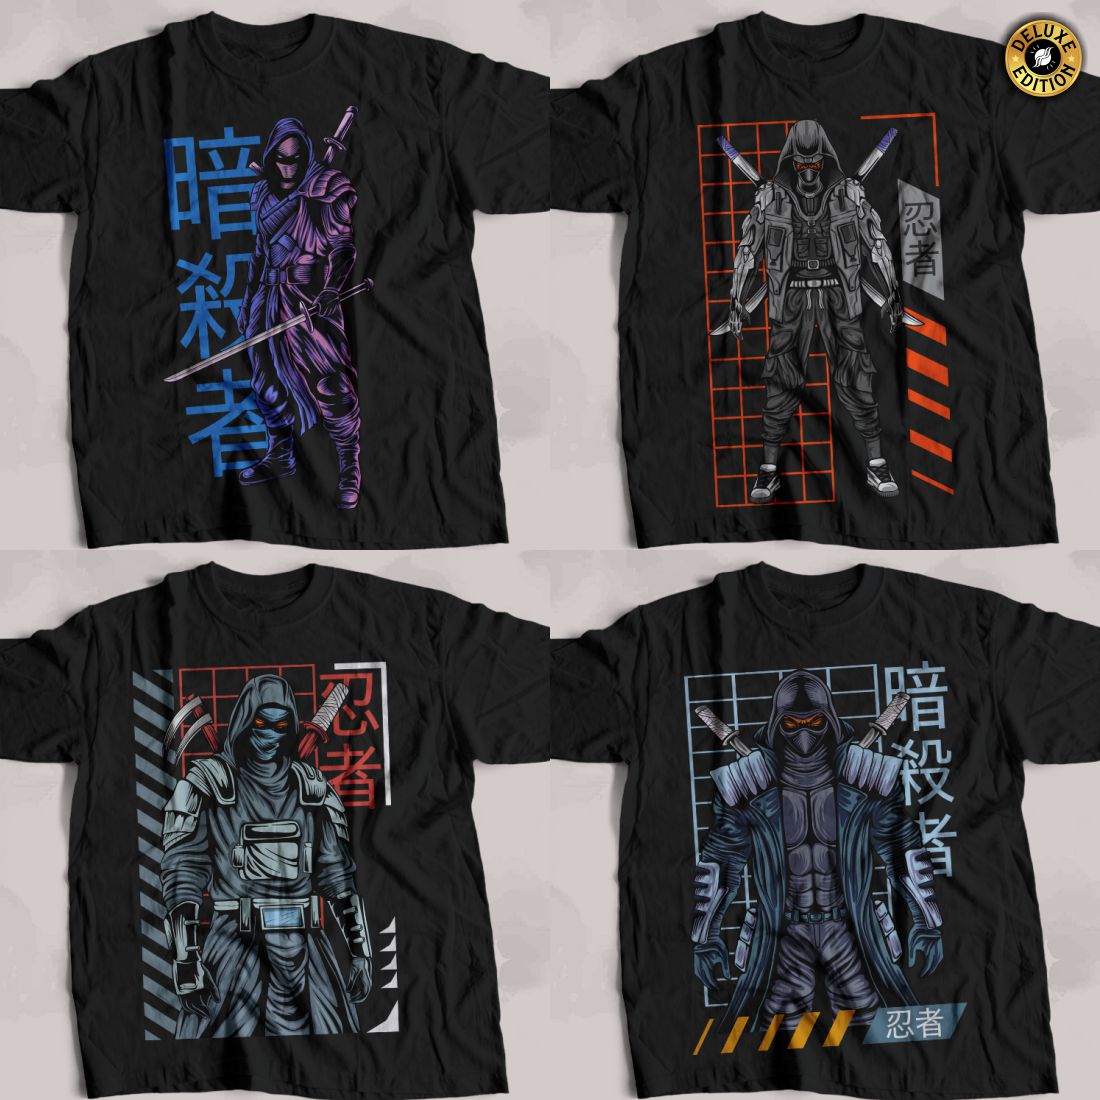 Japanese Samurai T-shirt Designs Vector Bundle - MasterBundles